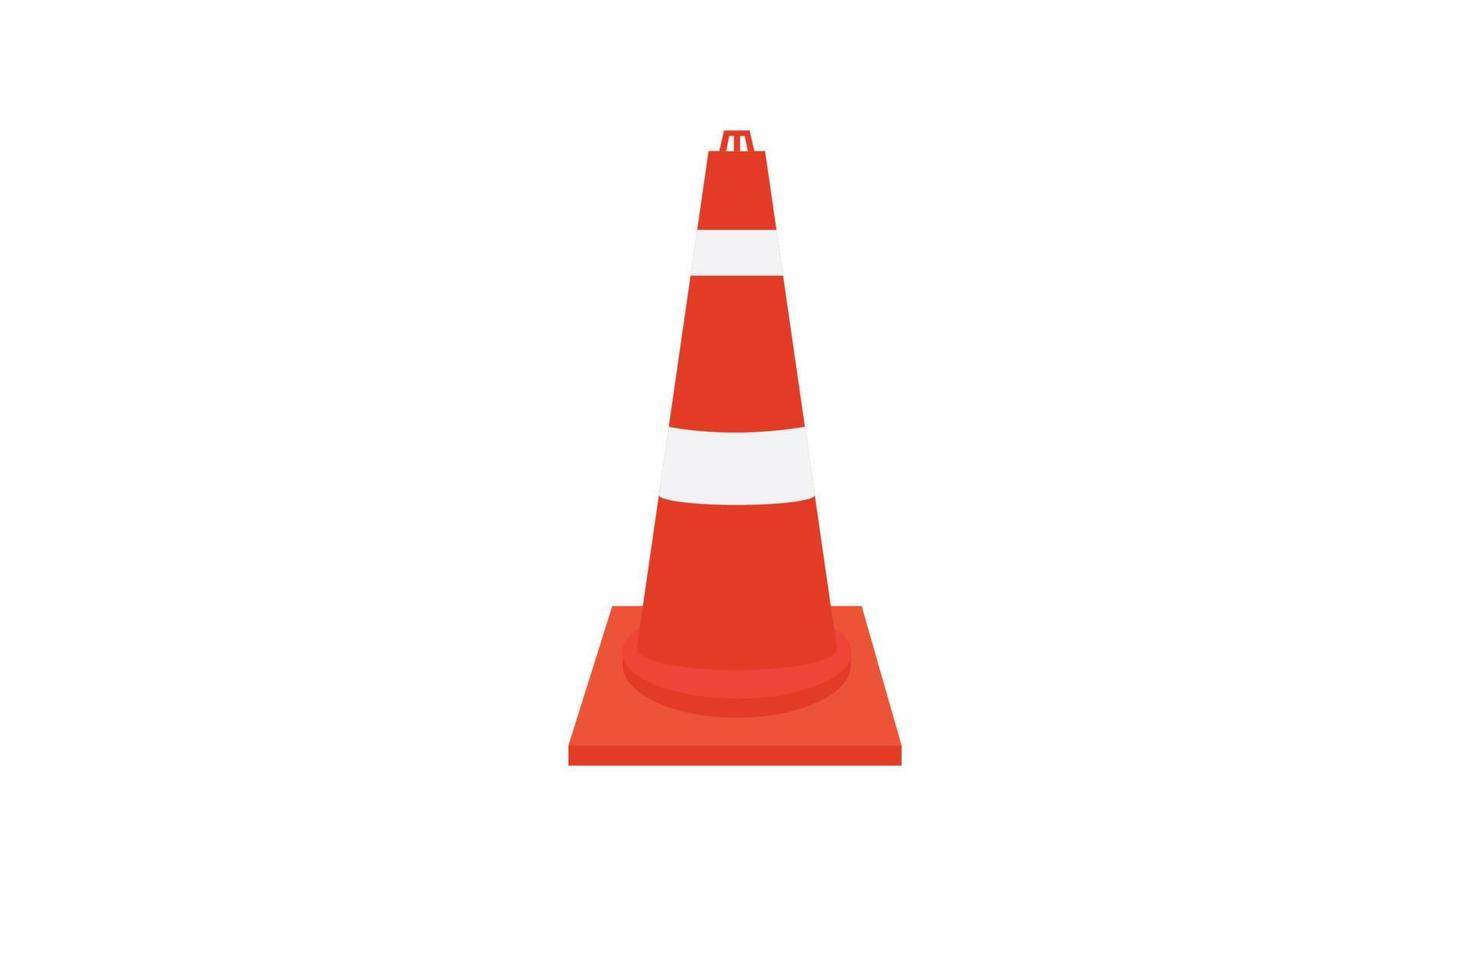 cone de trânsito isolado no fundo branco, vetor